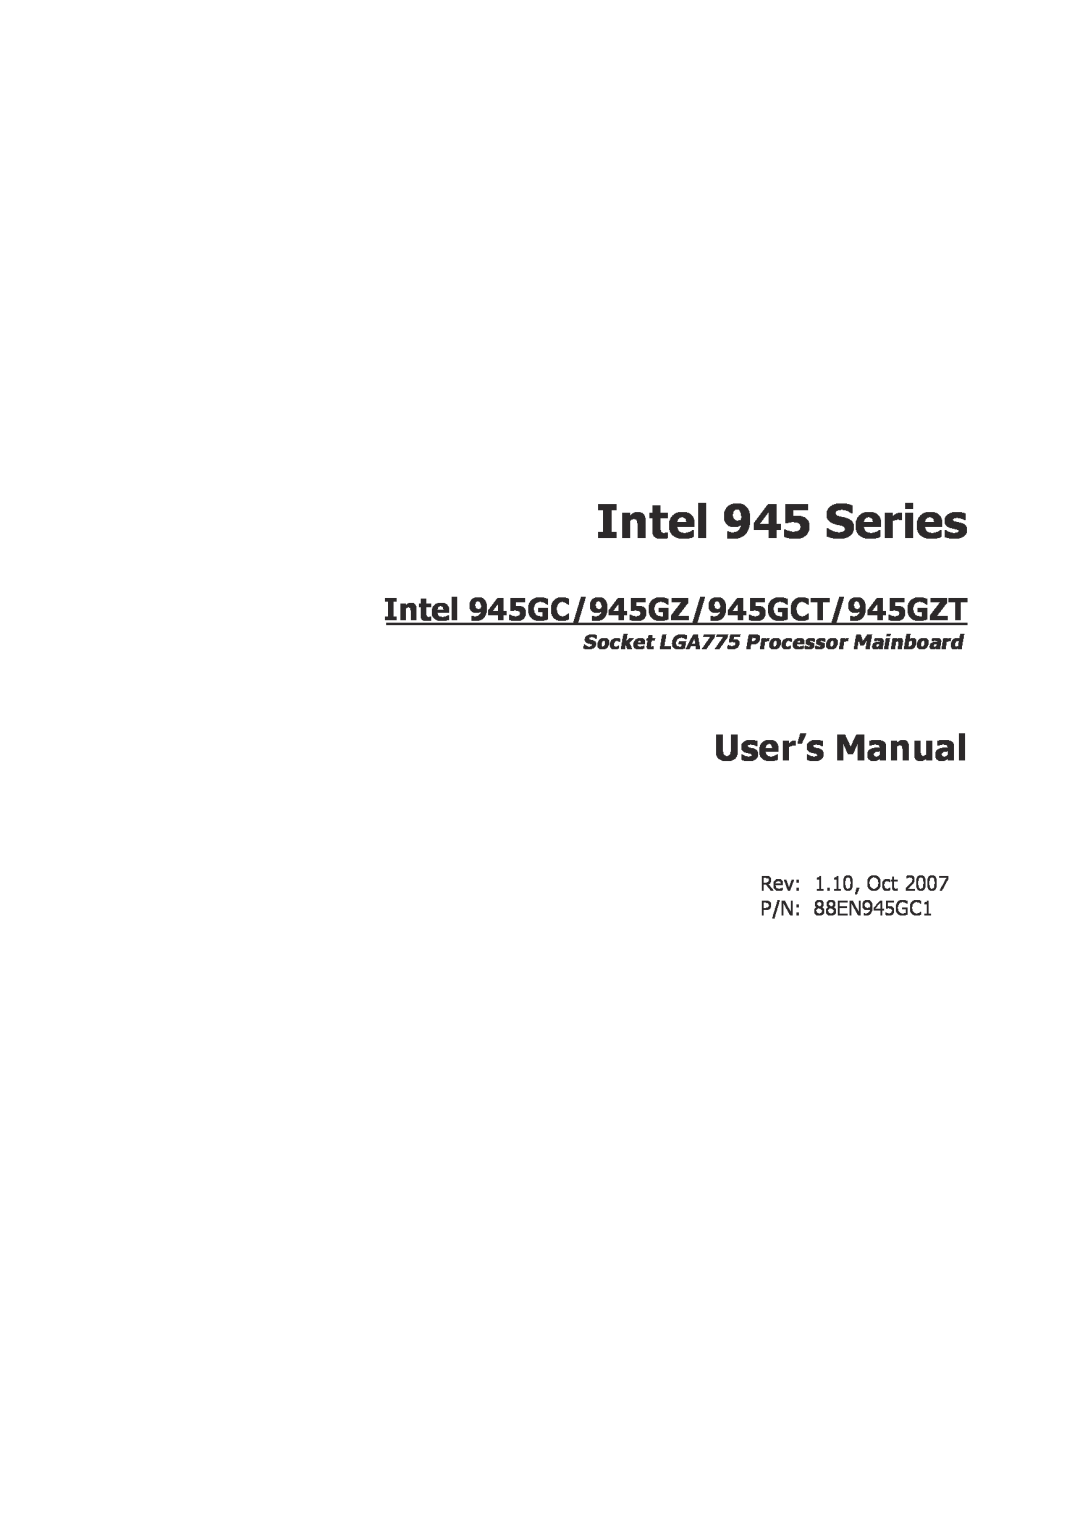 Intel user manual Intel 945GC/945GZ/945GCT/945GZT, Intel 945 Series, User’s Manual, Socket LGA775 Processor Mainboard 